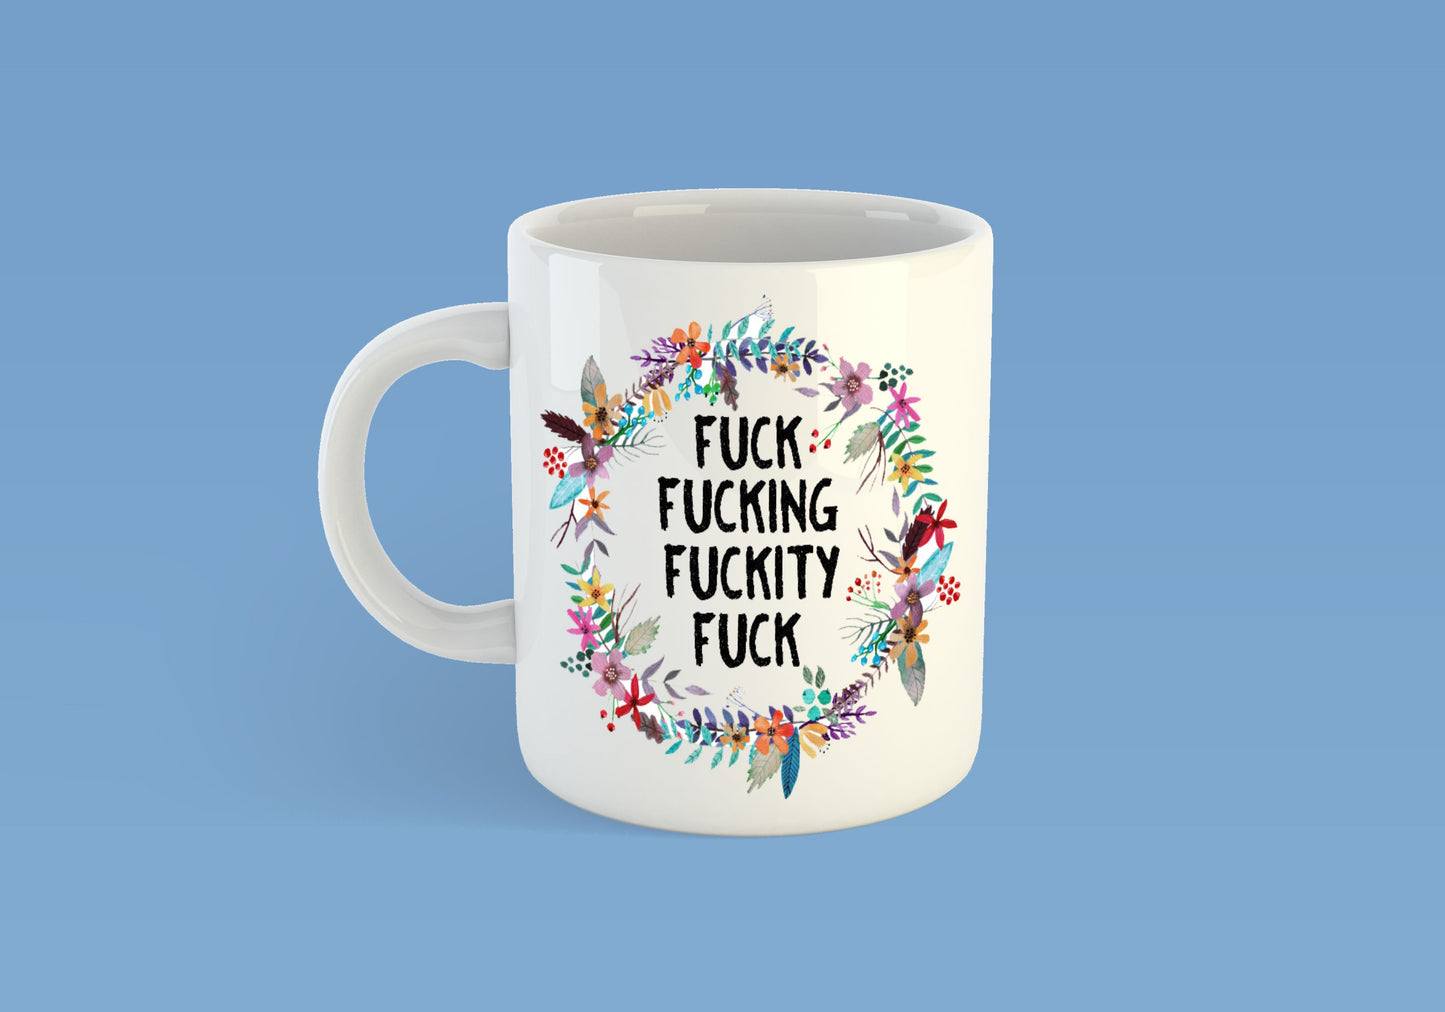 Uckity mug